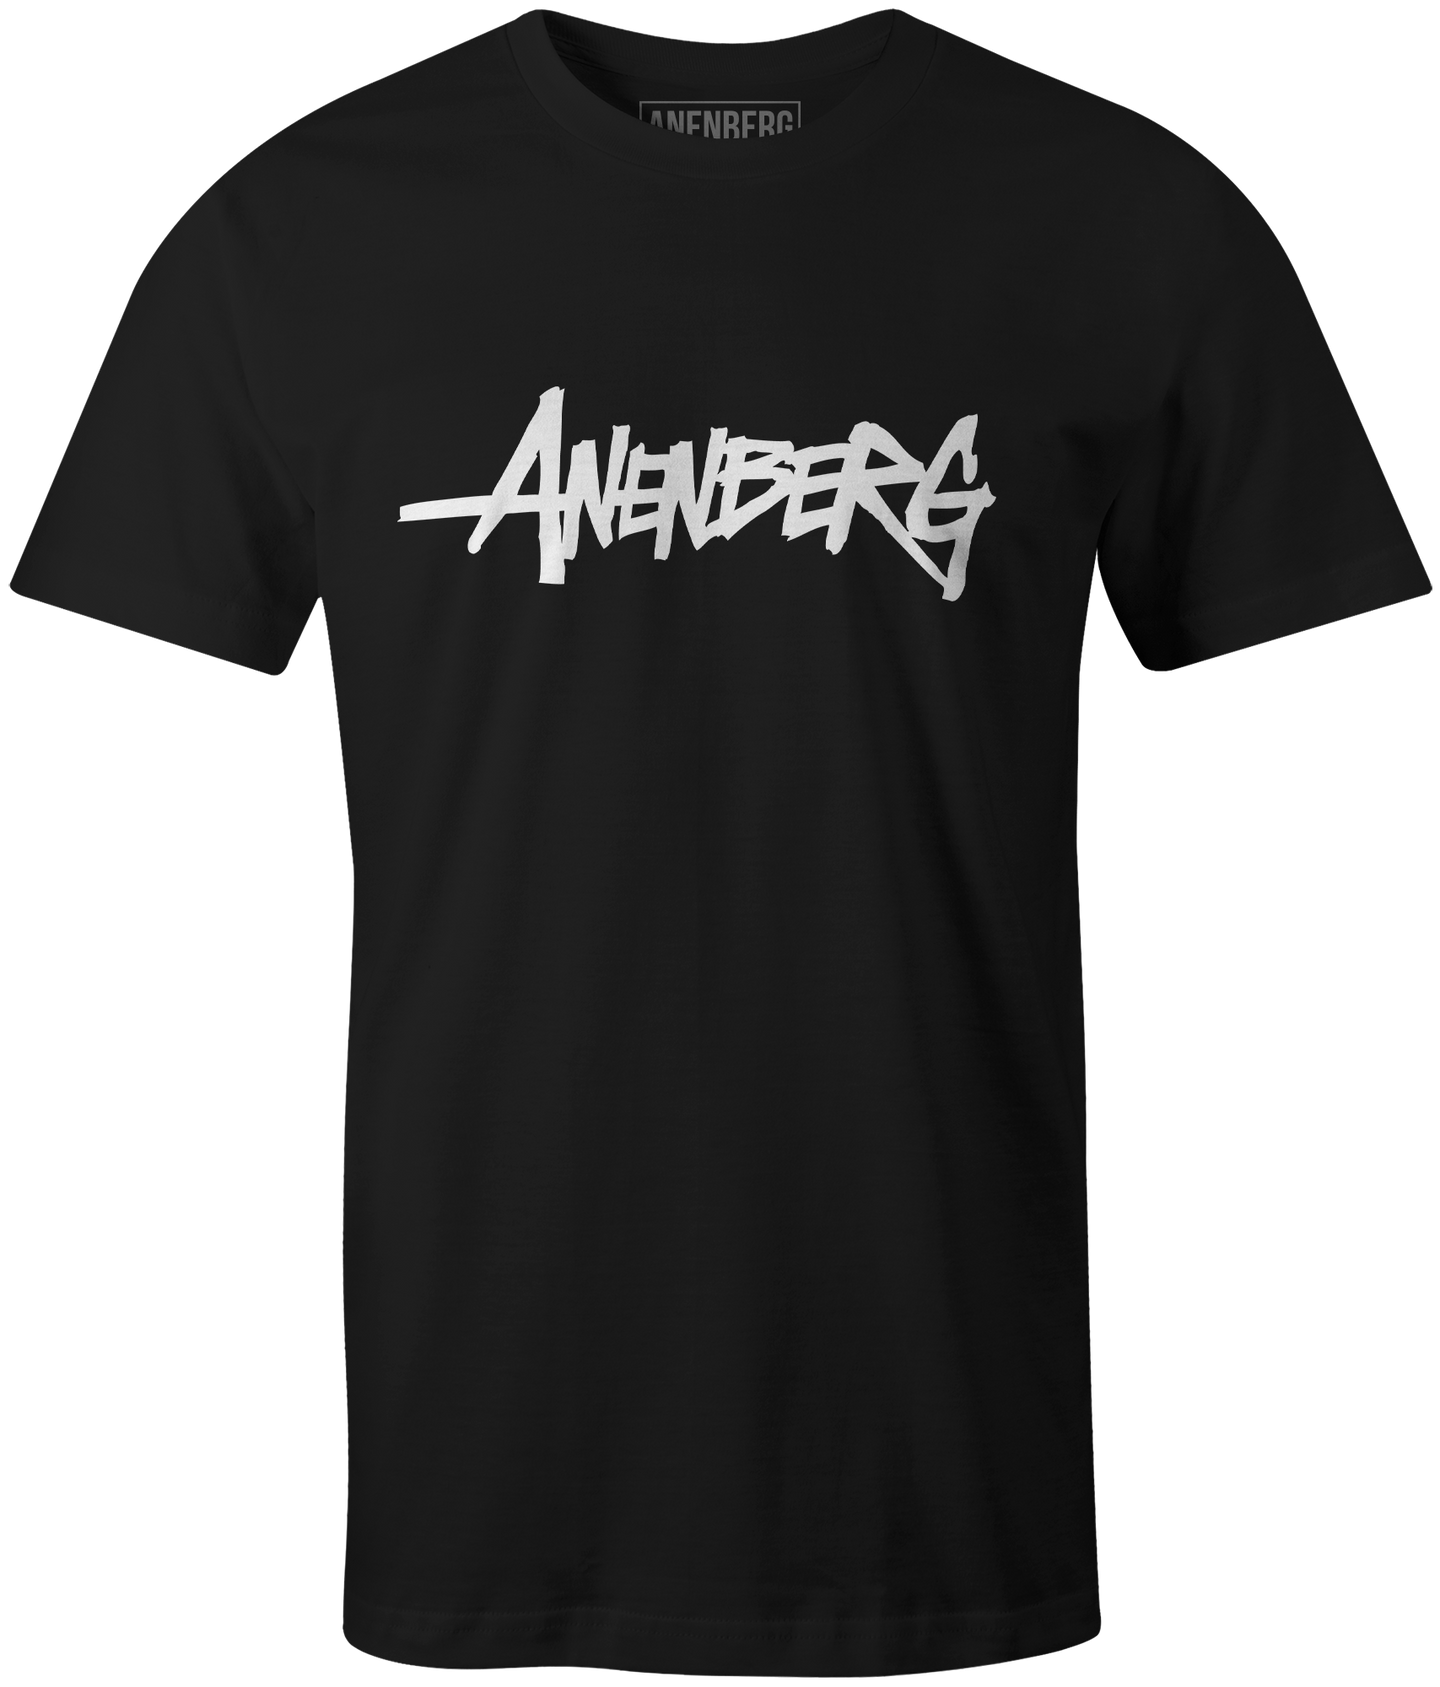 Anenberg, Single Story Classic American Made Mens Black Crew Neck Tee Shirt